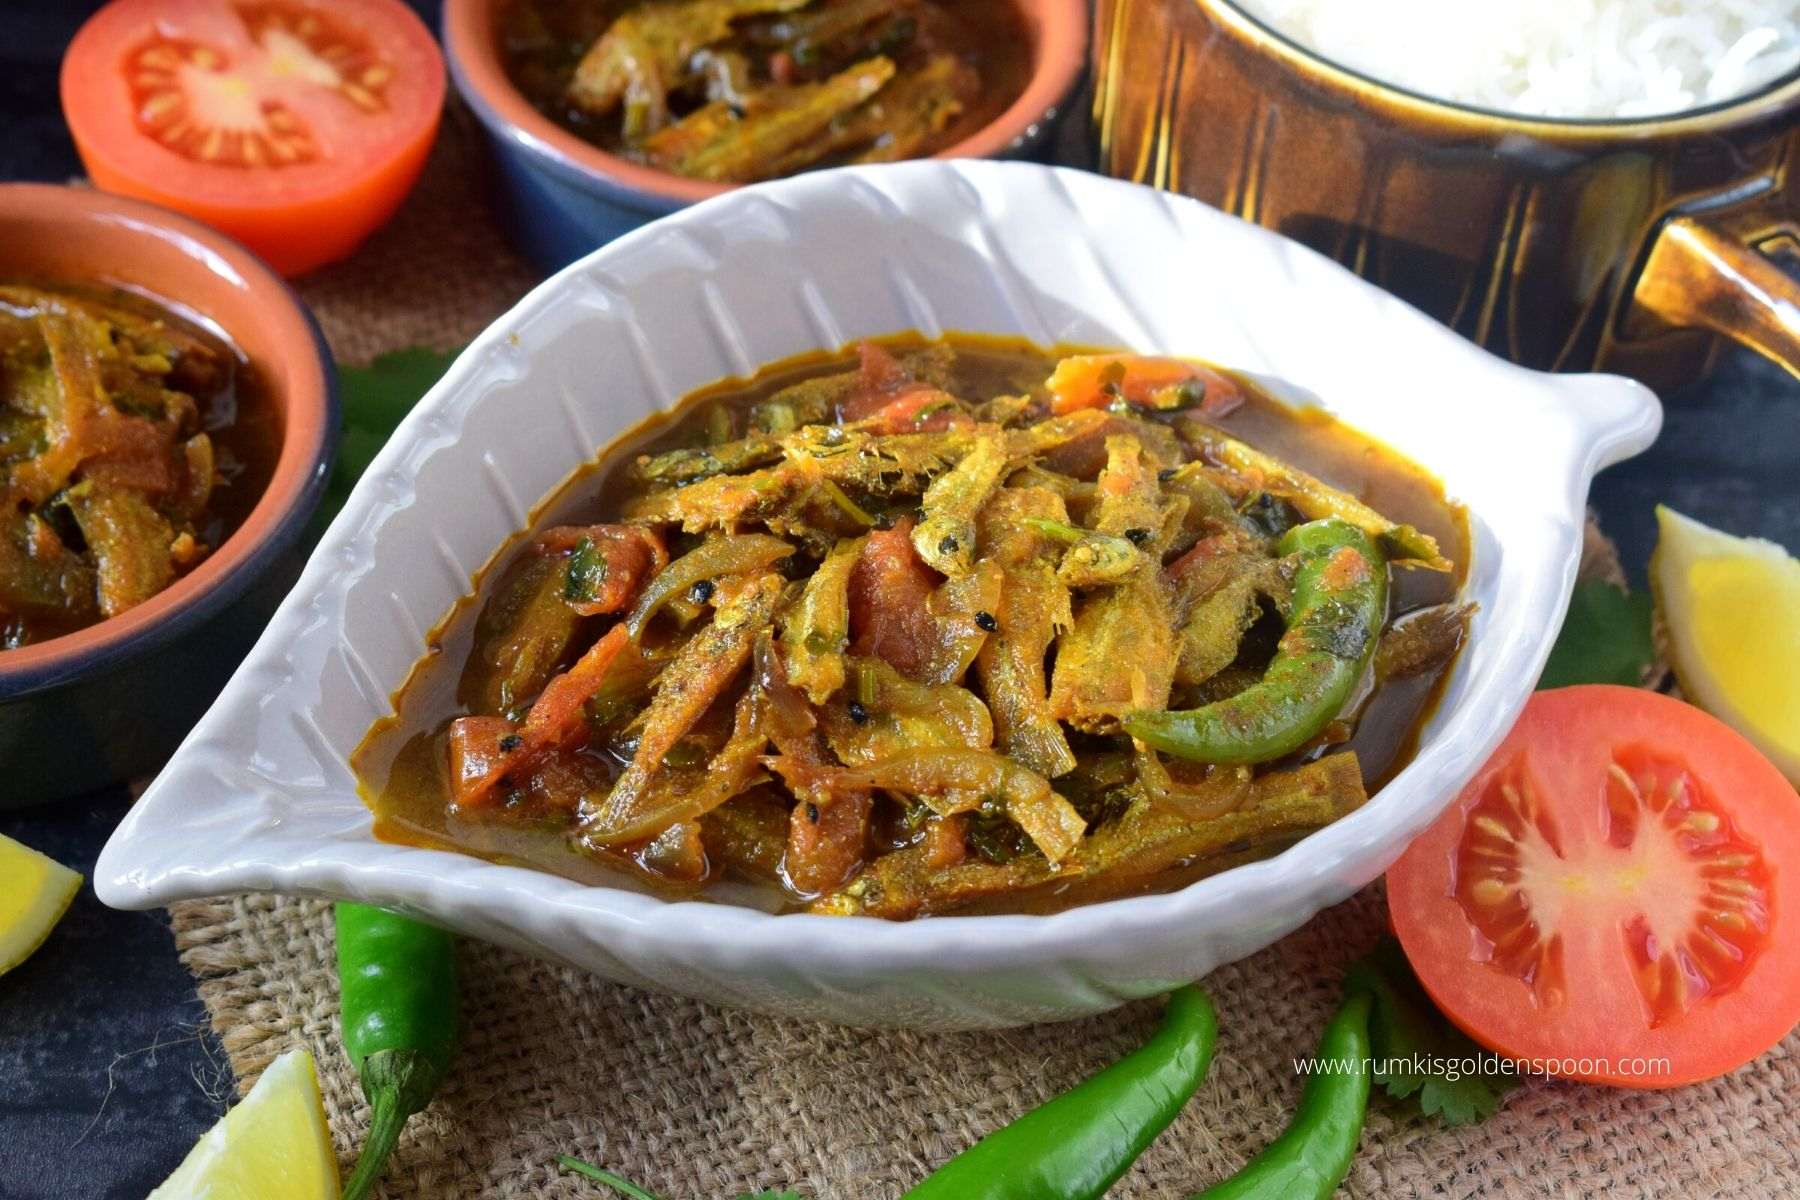 mourala macher jhal, mourala fish curry, mourala macher recipe, morola macher recipe, mourola macher recipe, mourola macher bati chorchori, mourala chorchori, recipe for small fish, choti machli ki gravy, small fish curry, small fish curry recipe, how to make small fish curry, Bengali style fish curry, Bengali style fish curry recipe, recipe for fish curry Bengali style, recipe of fish curry Bengali style, fish curry recipe, fish curries, traditional bengali food, Bengali recipe fish, Bengali recipes fish, recipe for bengali fish curry, Bengali recipe for fish, Bengali recipe of fish, how to make mourala macher jhal, Rumki's Golden Spoon